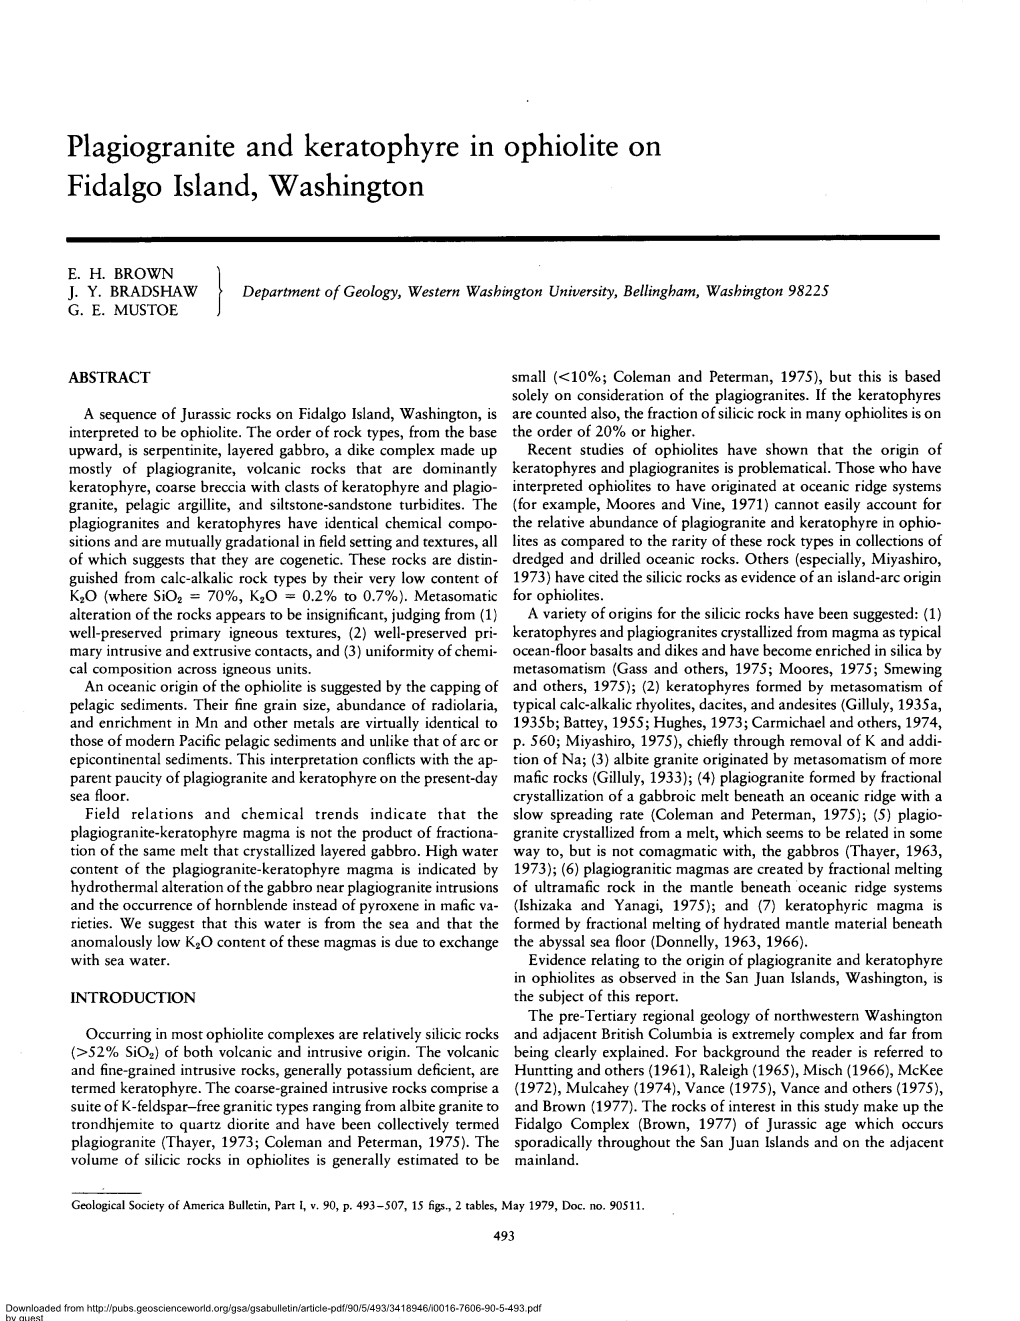 Plagiogranite and Keratophyre in Ophiolite on Fidalgo Island, Washington